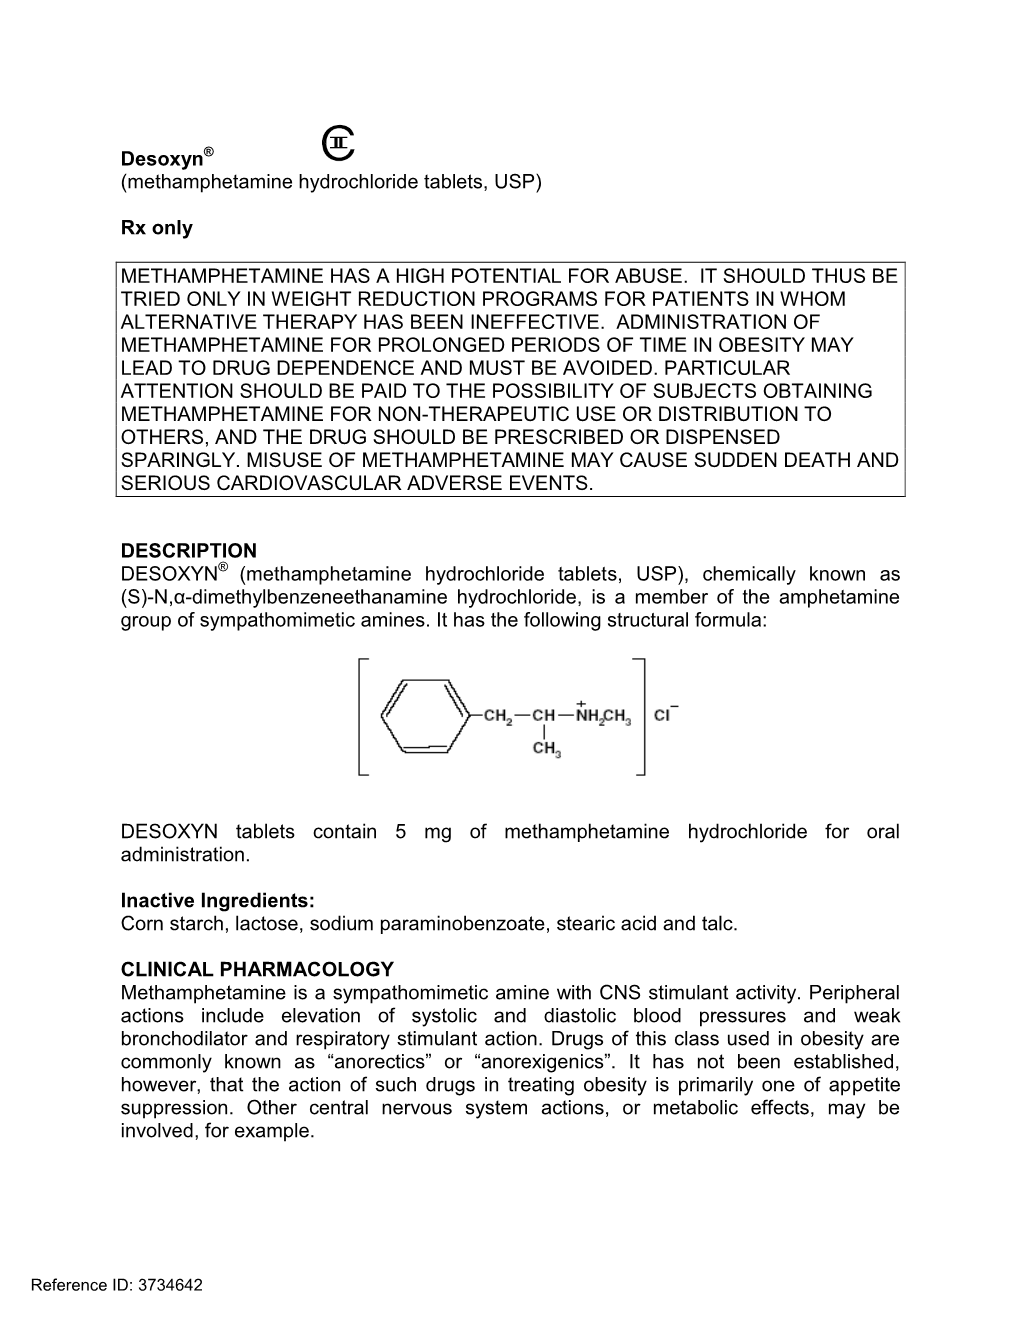 Desoxyn (Methamphetamine Hydrochloride Tablets, USP)